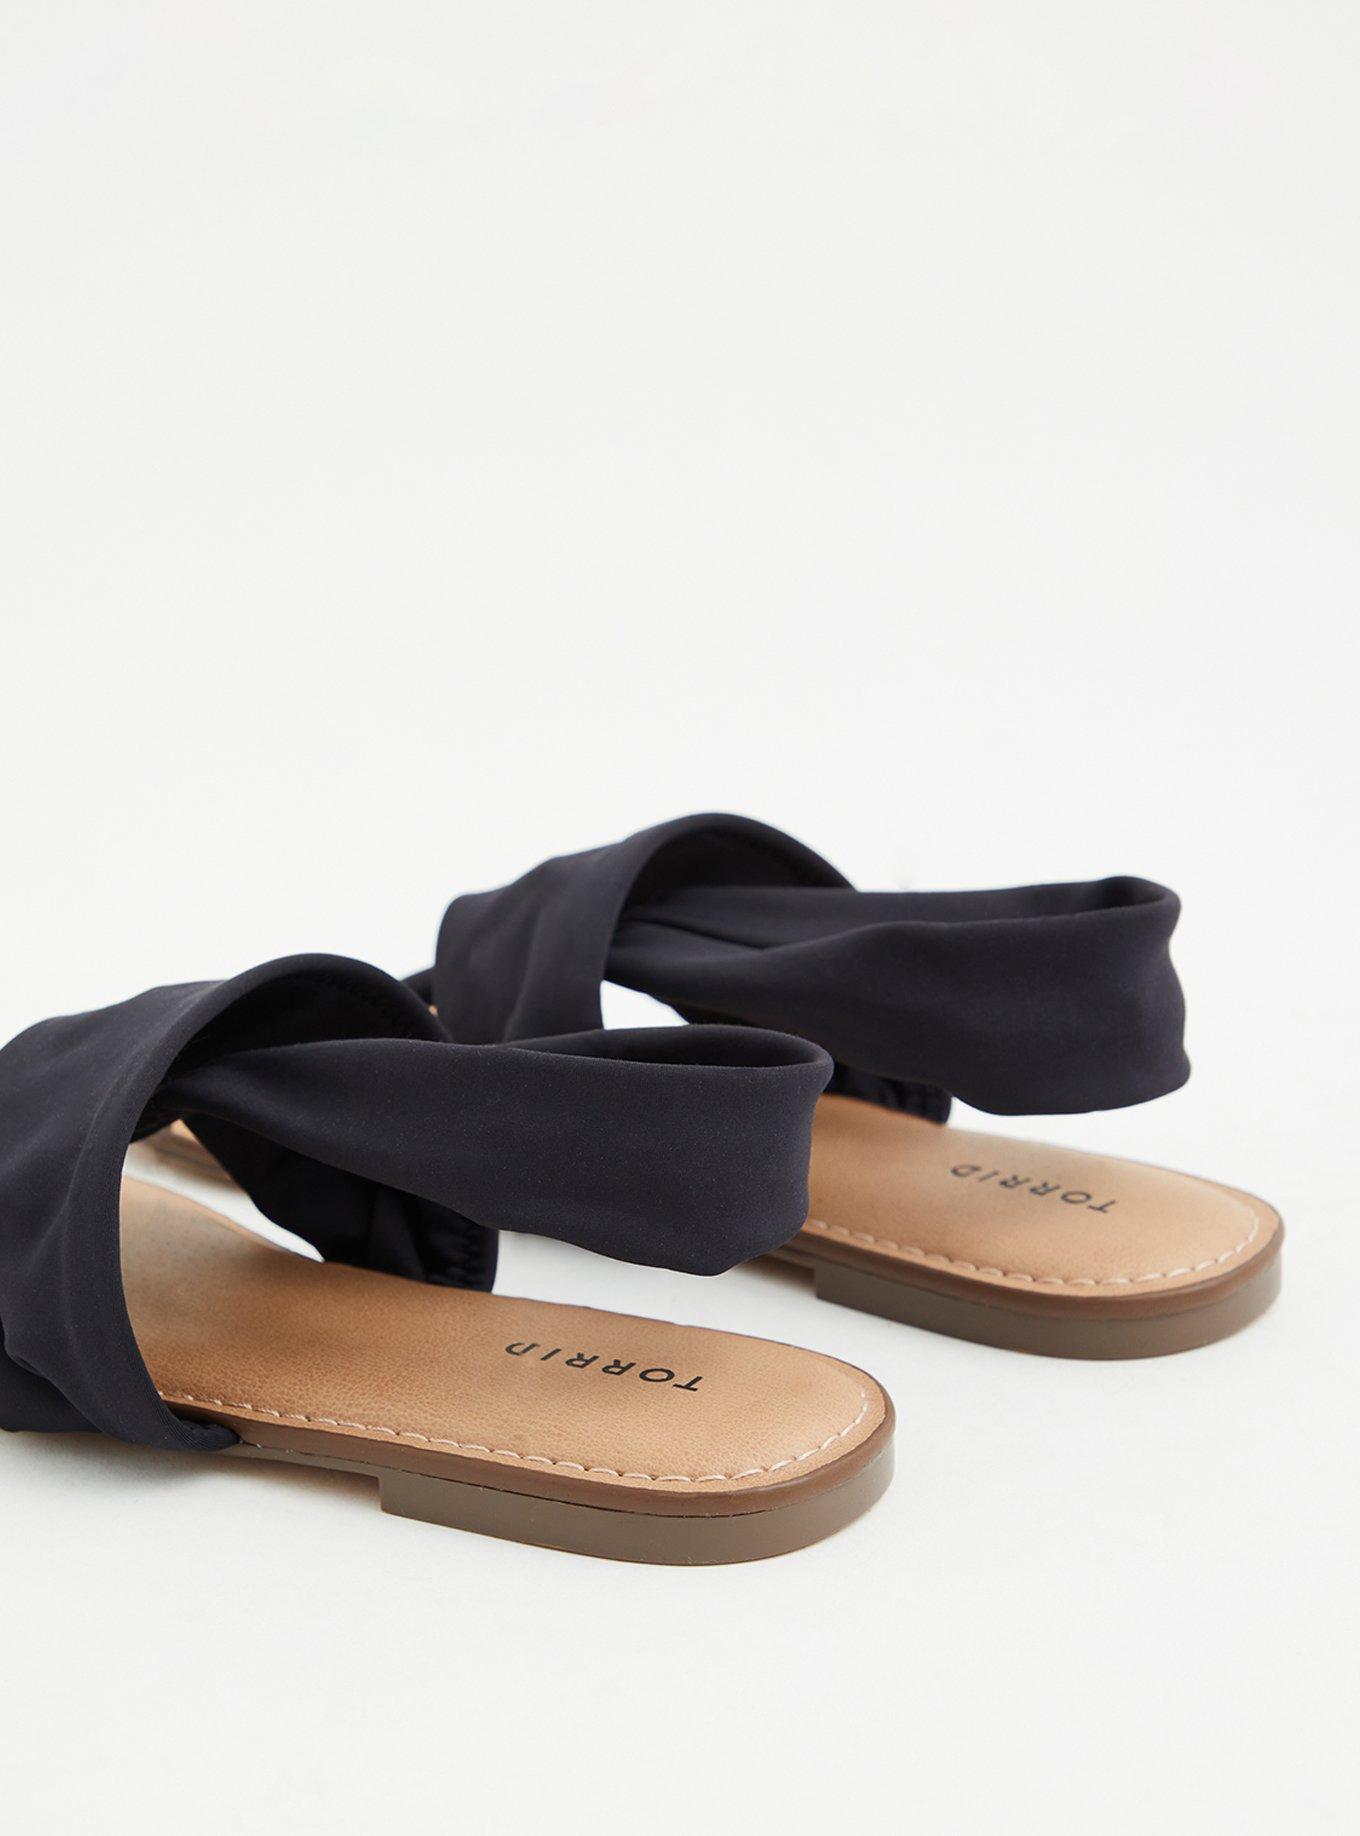 New York & Company Women's Katie T-Strap Sandals